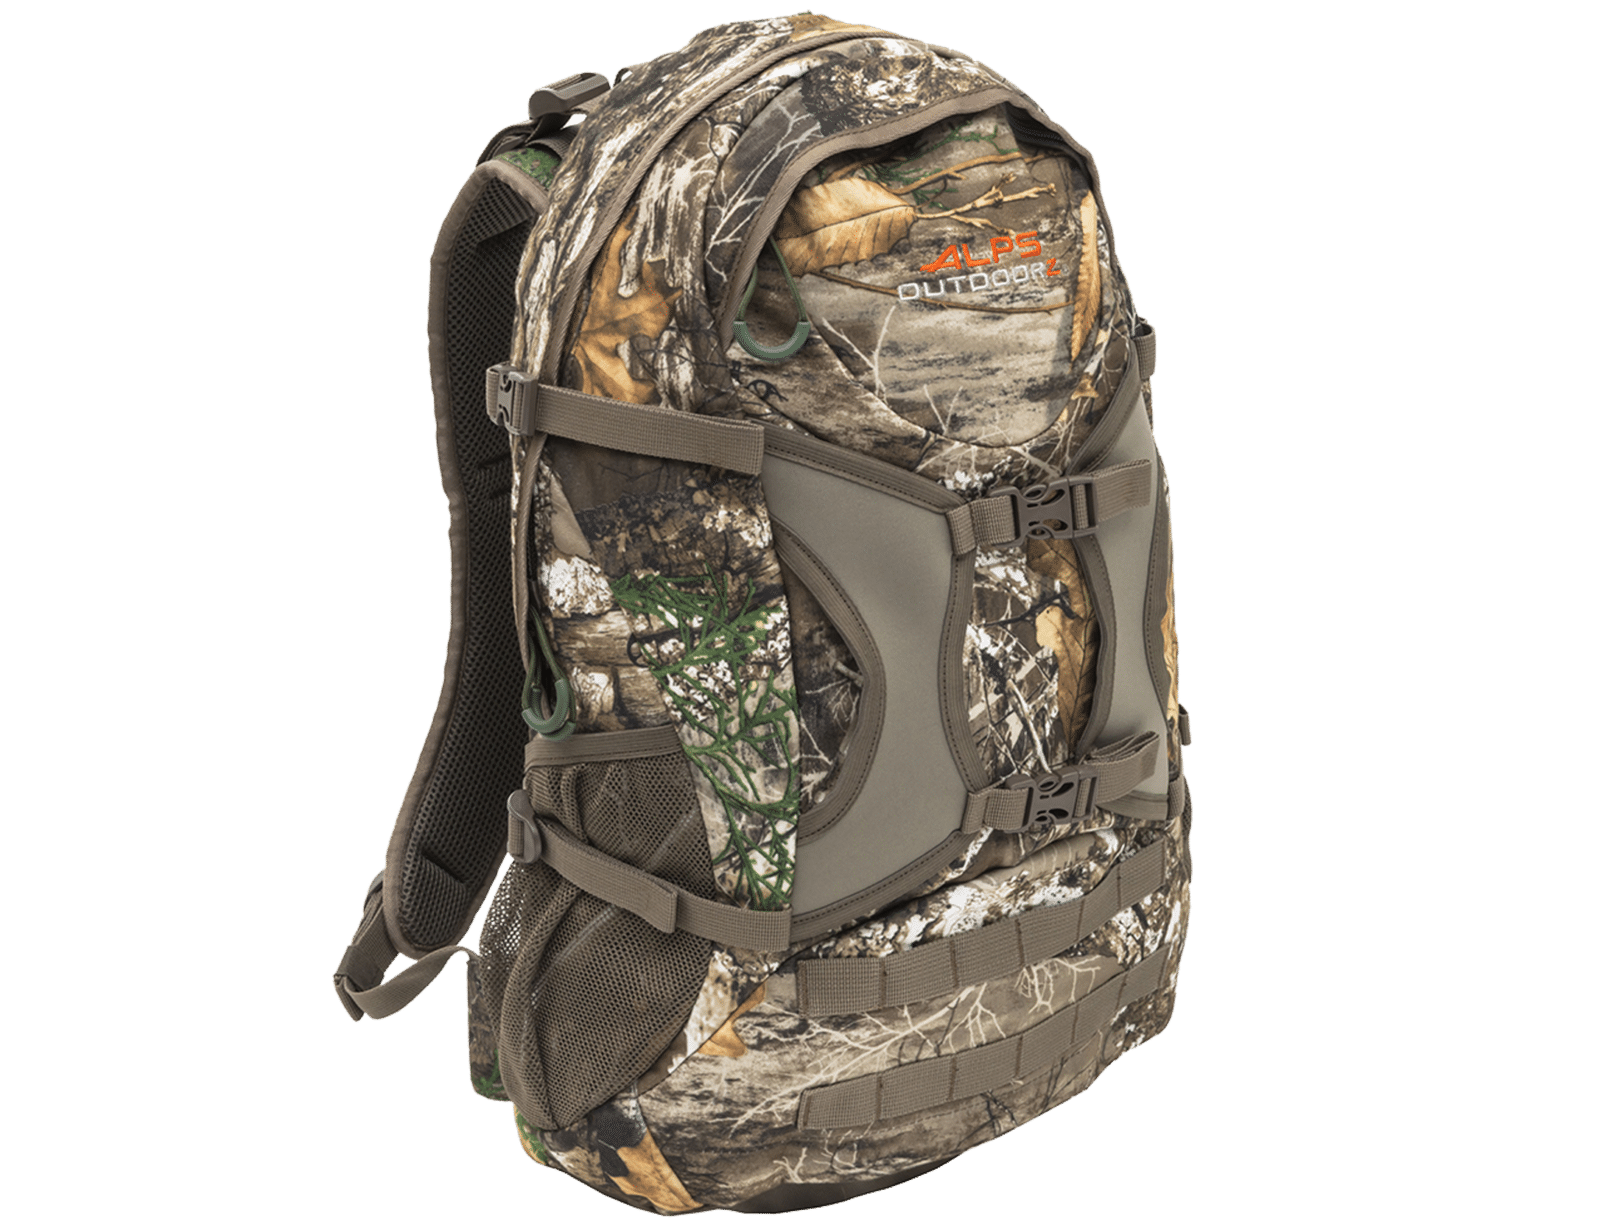 ALPS Trail Blazer Pack